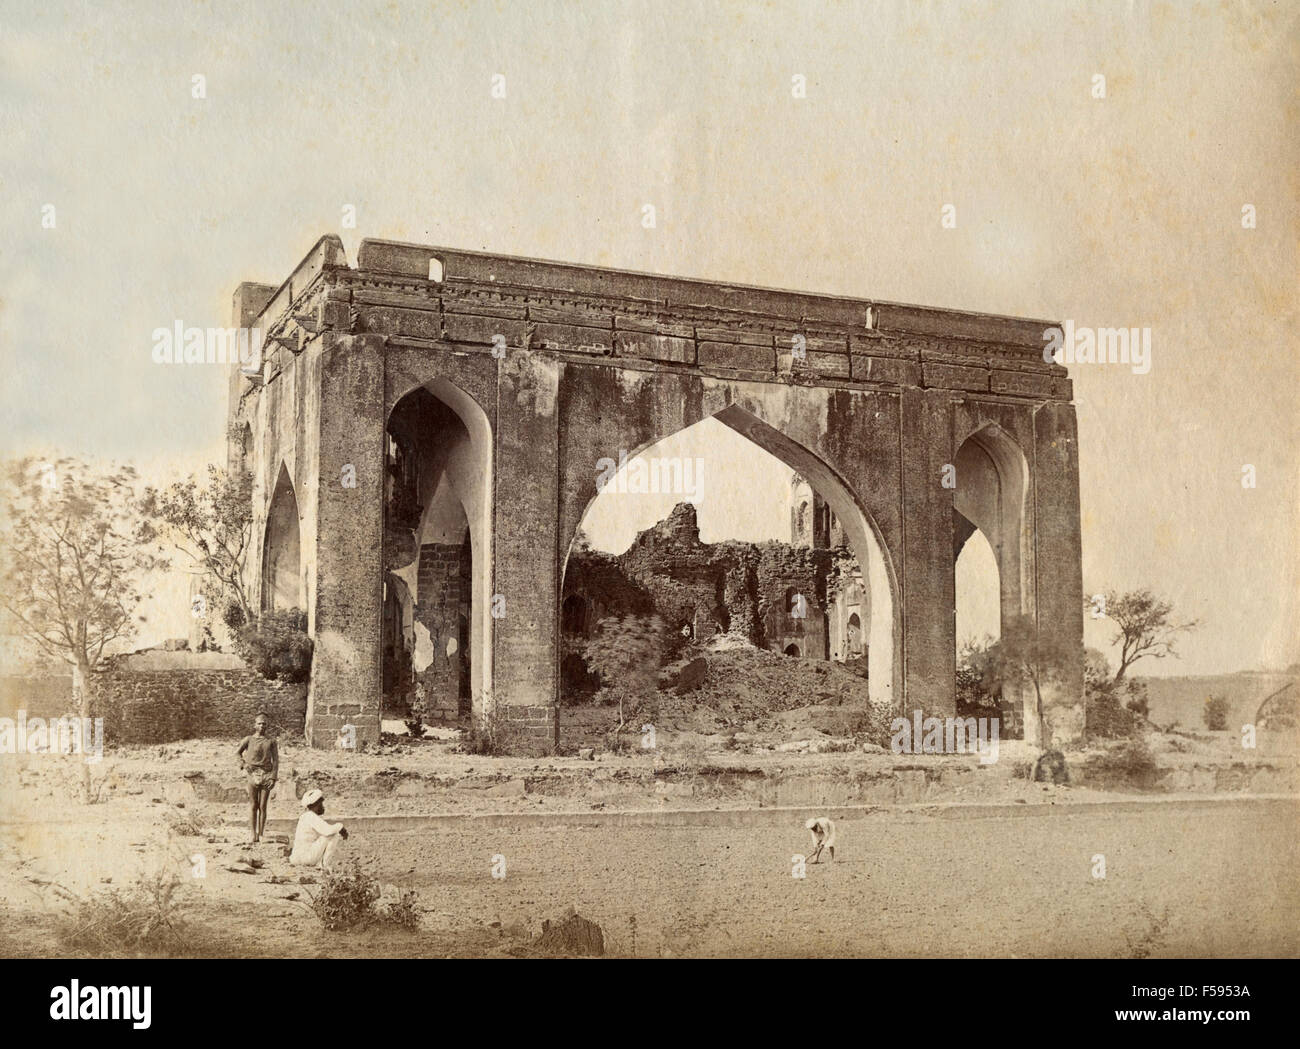 Ruined temple, India Stock Photo